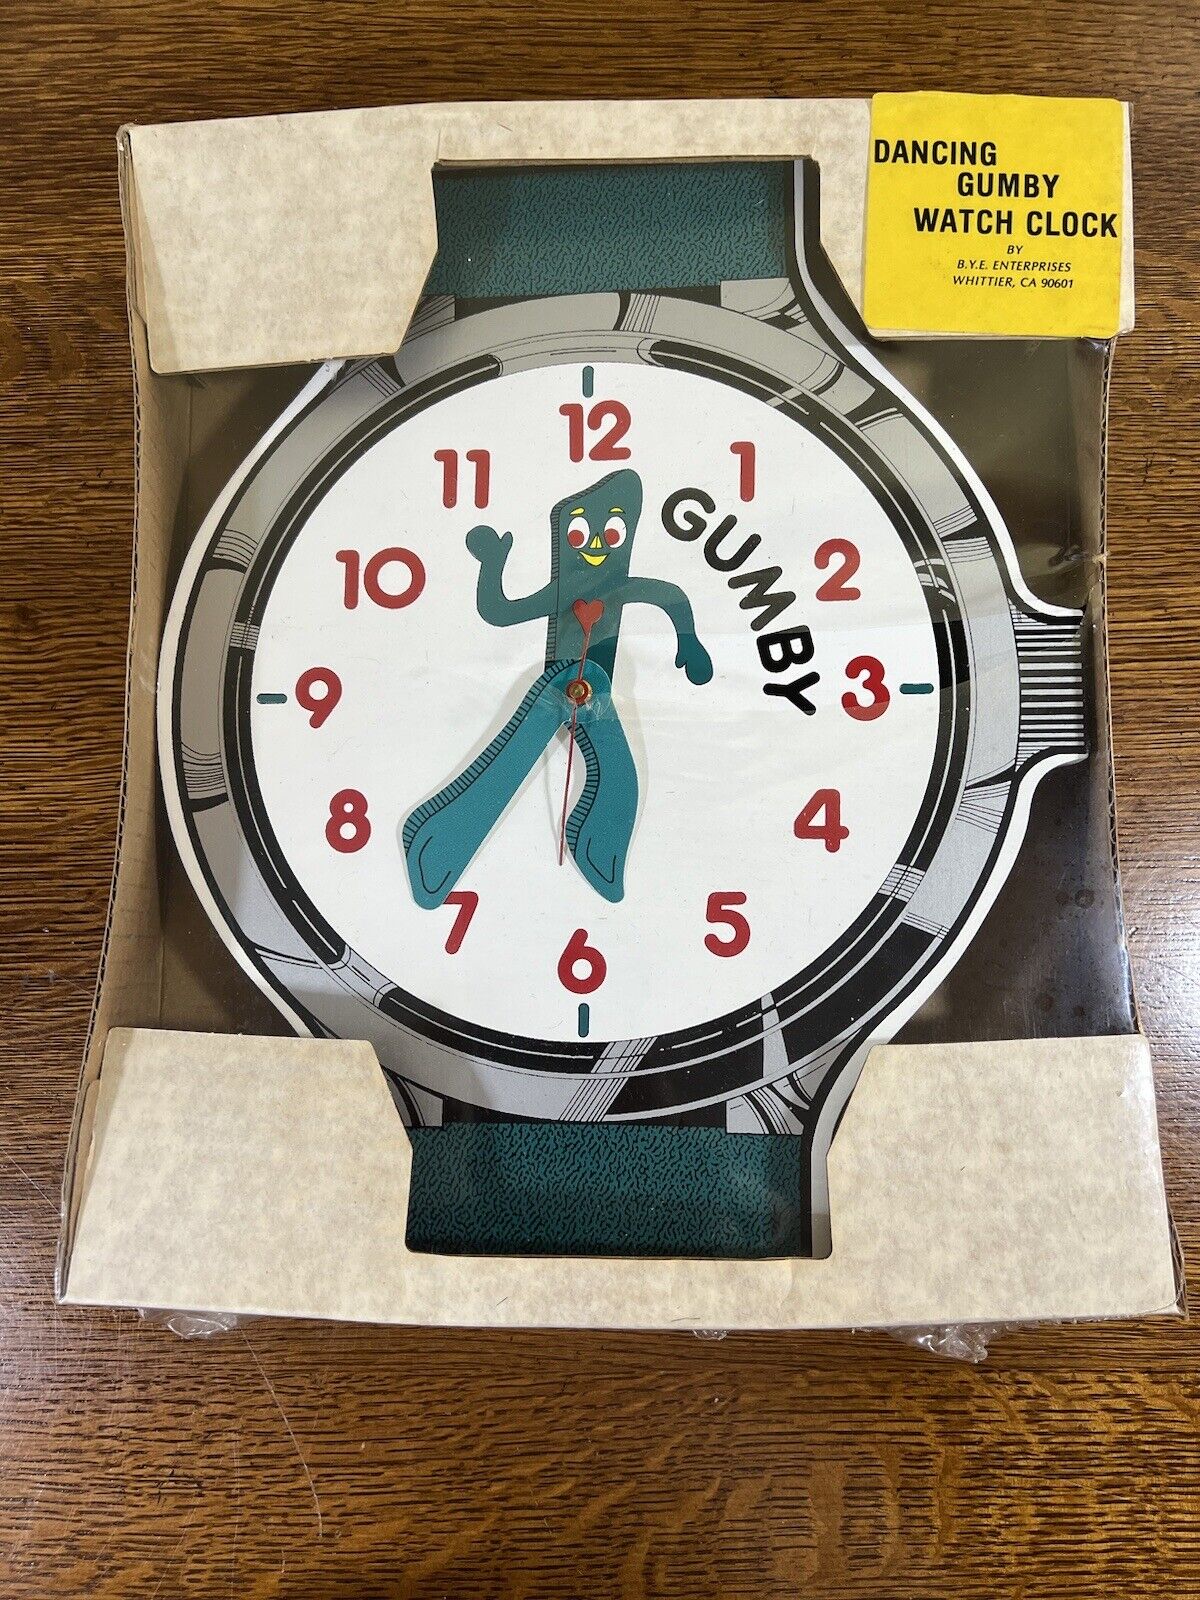 Rare NOS Vintage Dancing Gumby Watch Clock 1980’s BYE Enterprises